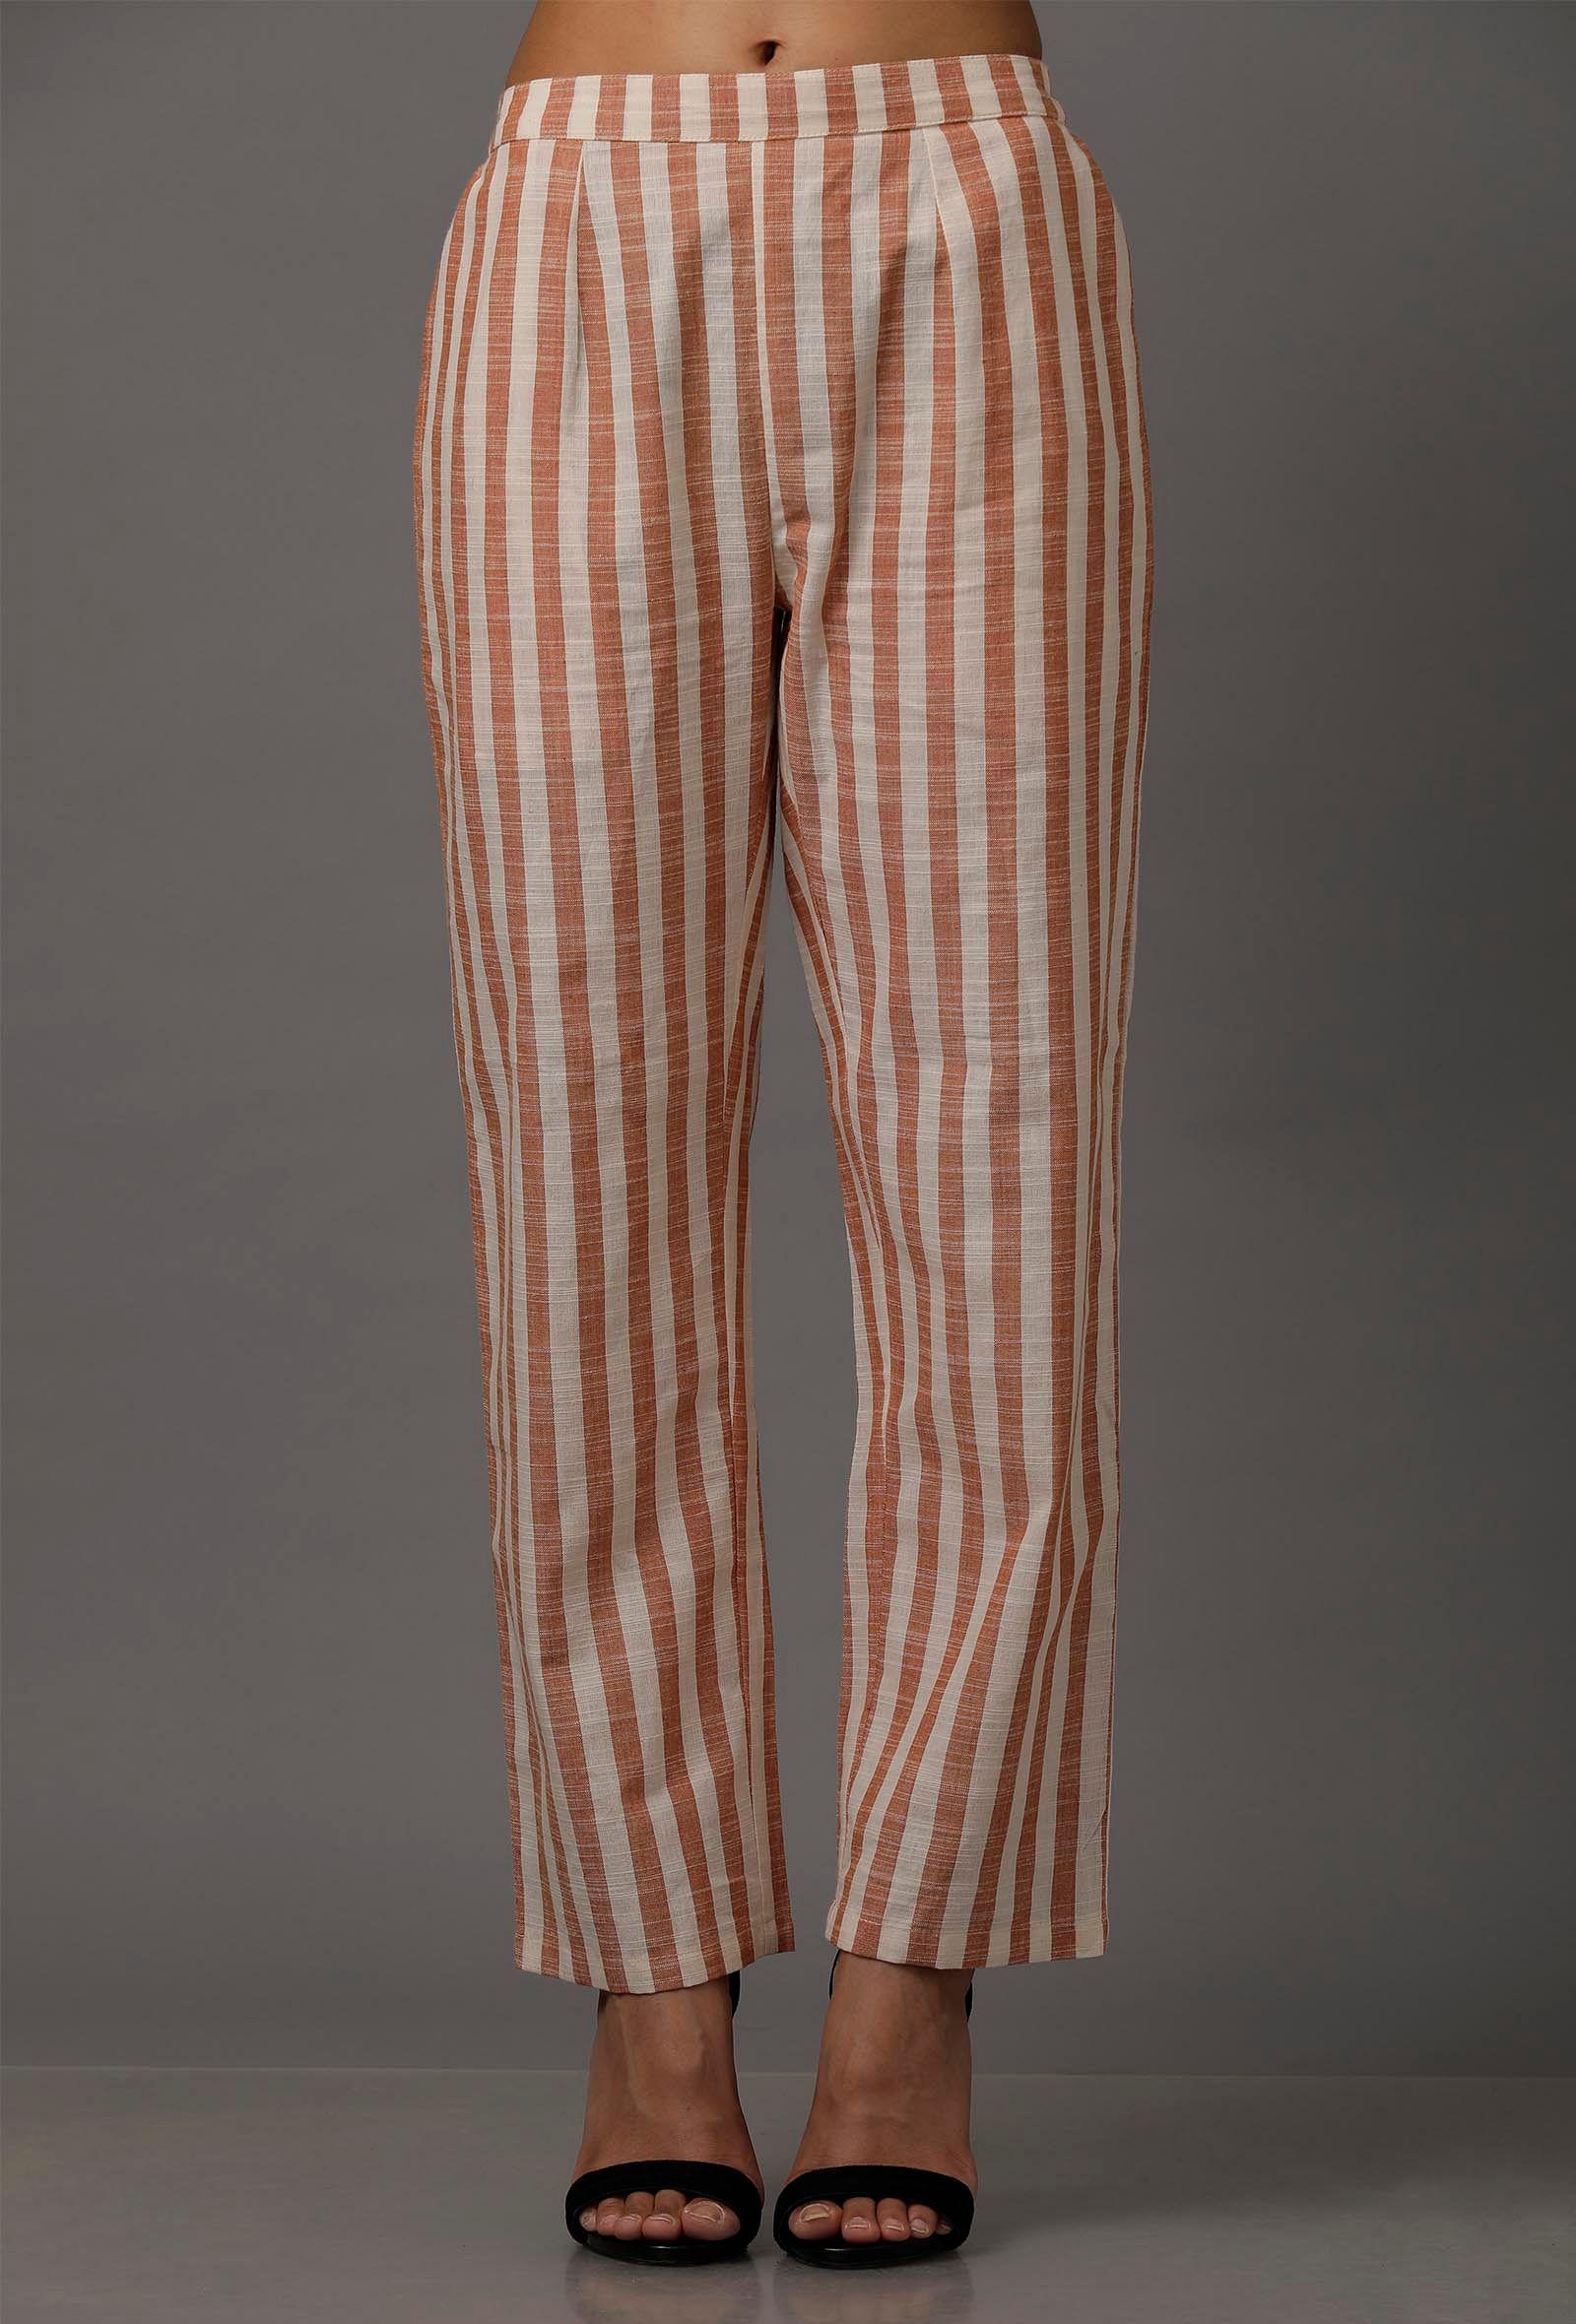 orange-and-white-stripes-pure-woven-cotton-pants